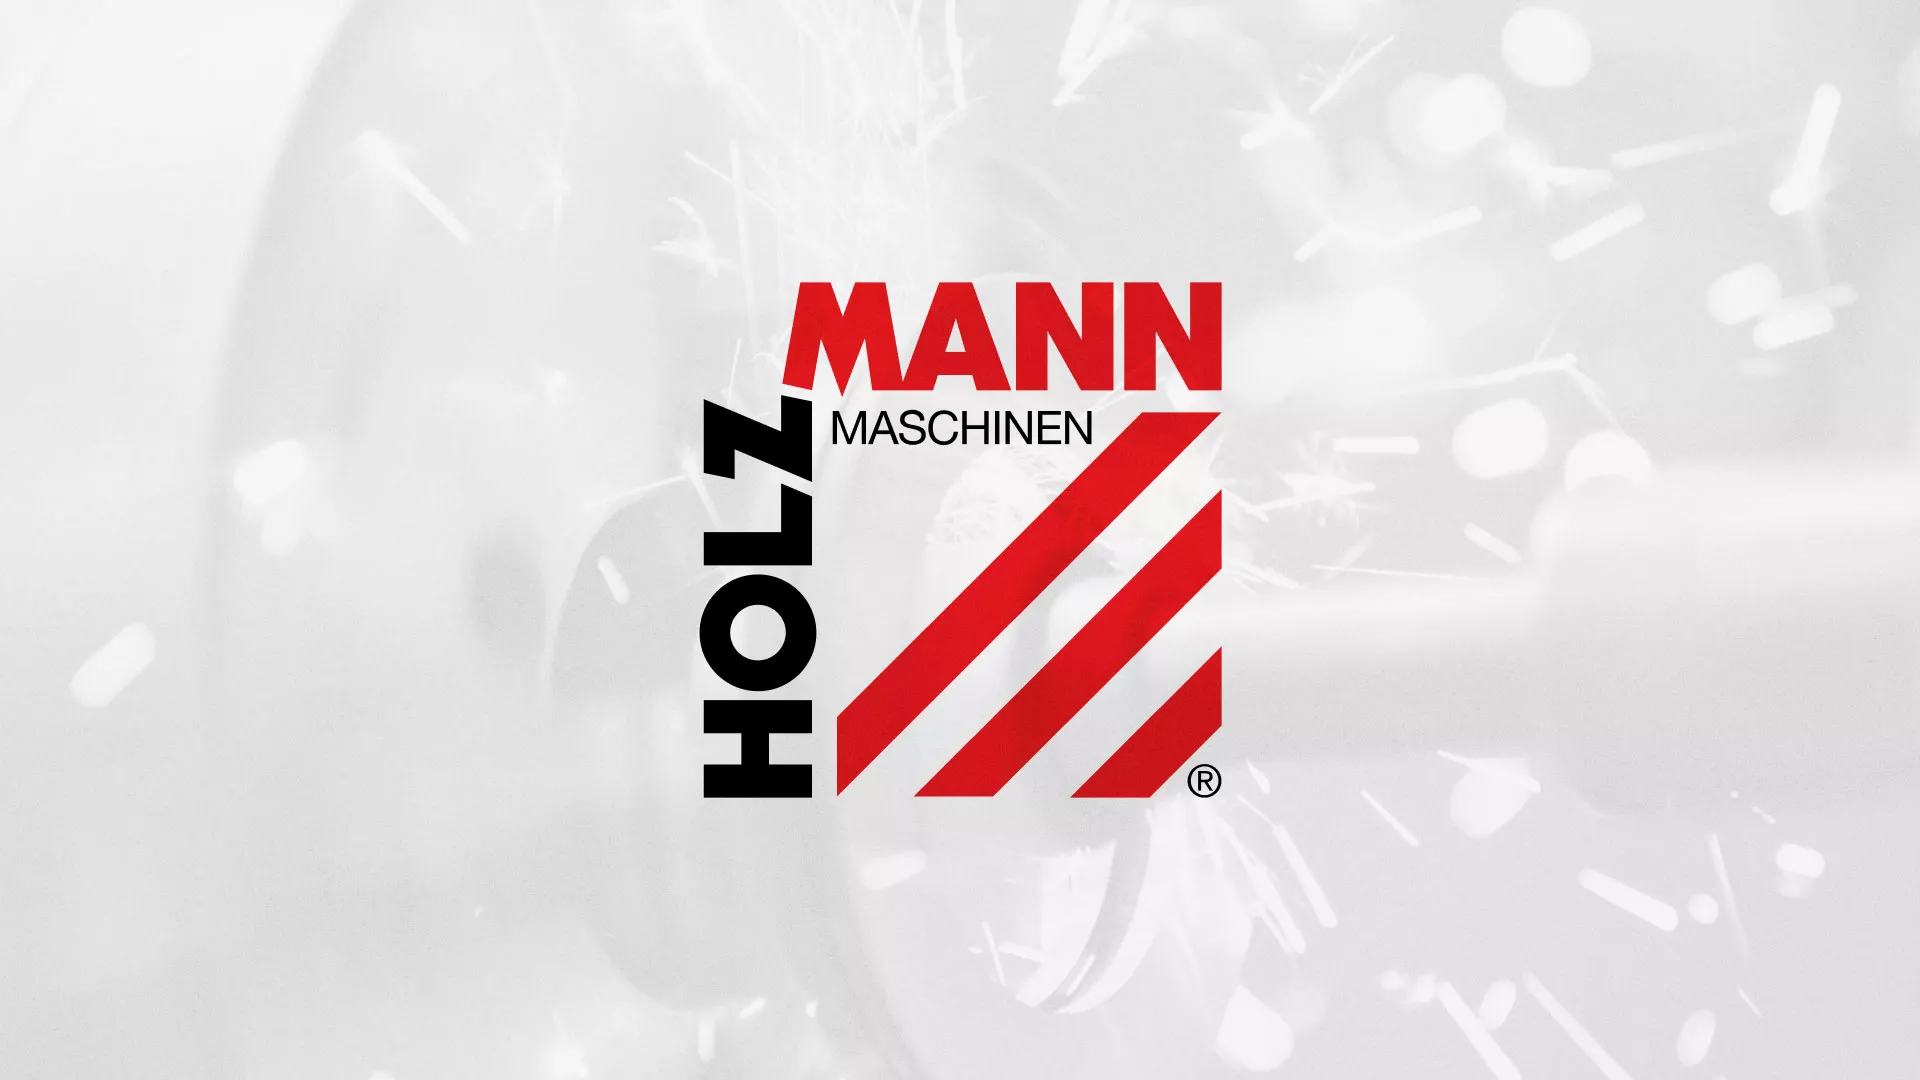 Создание сайта компании «HOLZMANN Maschinen GmbH» в Петухово